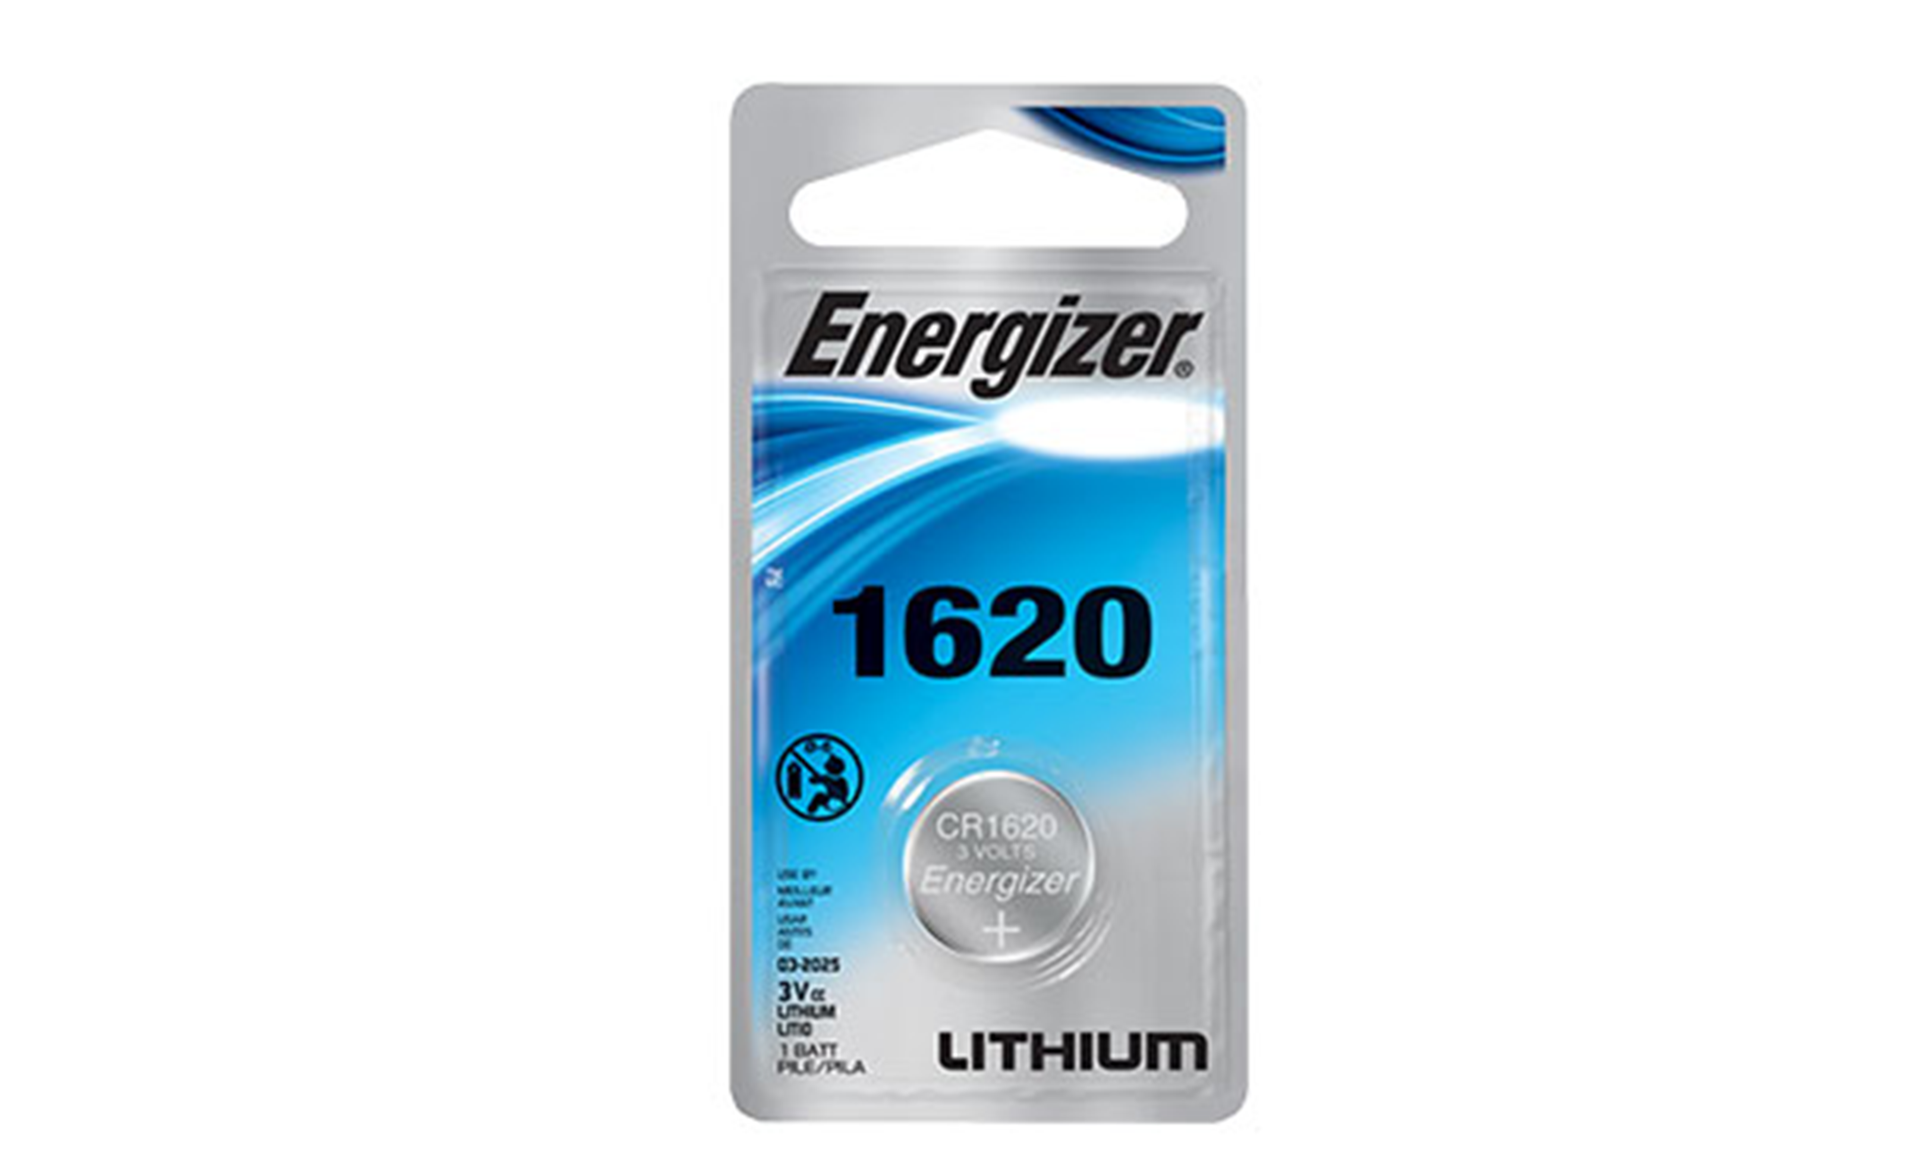 Energizer Battery 3V CR1620 - I-Technology